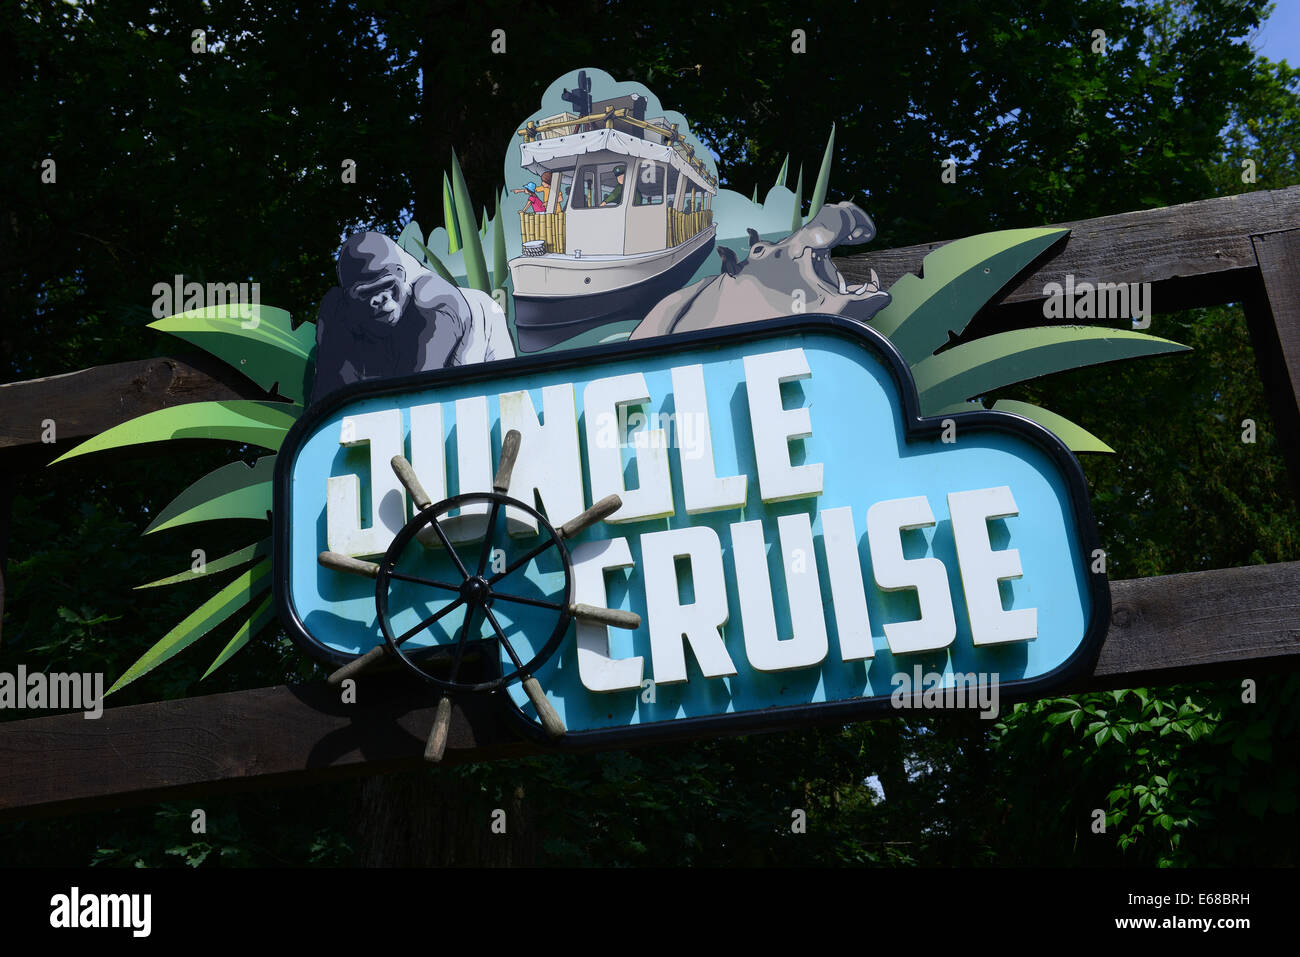 Longleat Safari Park, Jungle Cruise sign, Wiltshire, England Stock Photo